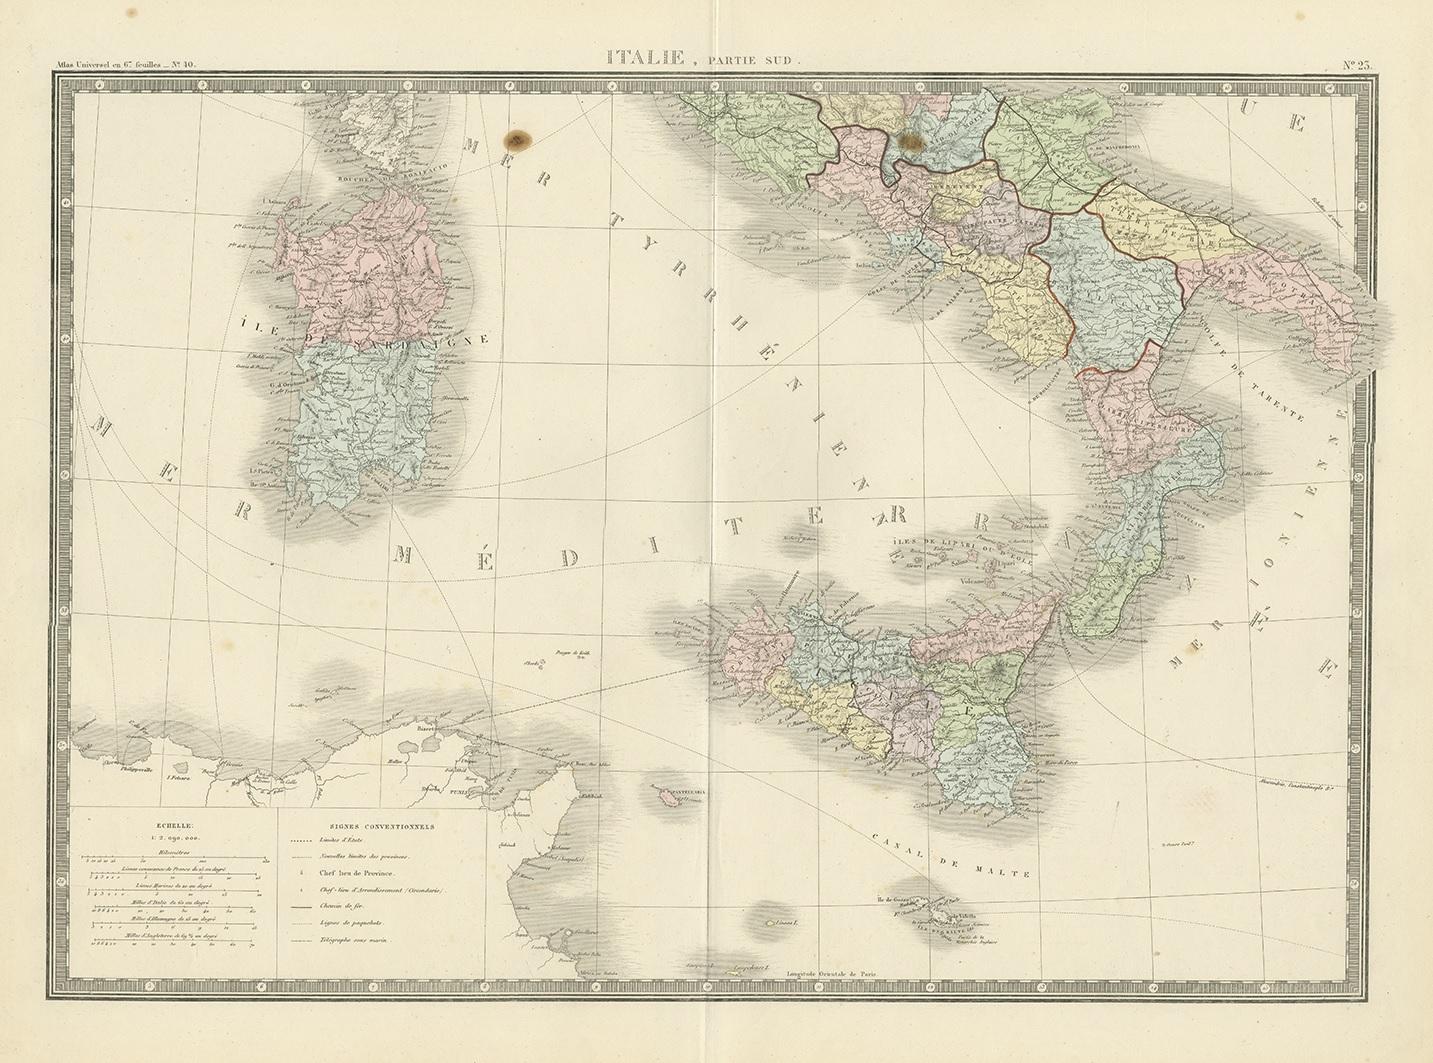 Antique map titled 'Italy, partie sud'. Large map of Southern Italy. This map originates from 'Atlas de Géographie Moderne Physique et Politique' by A. Levasseur. Published 1875.